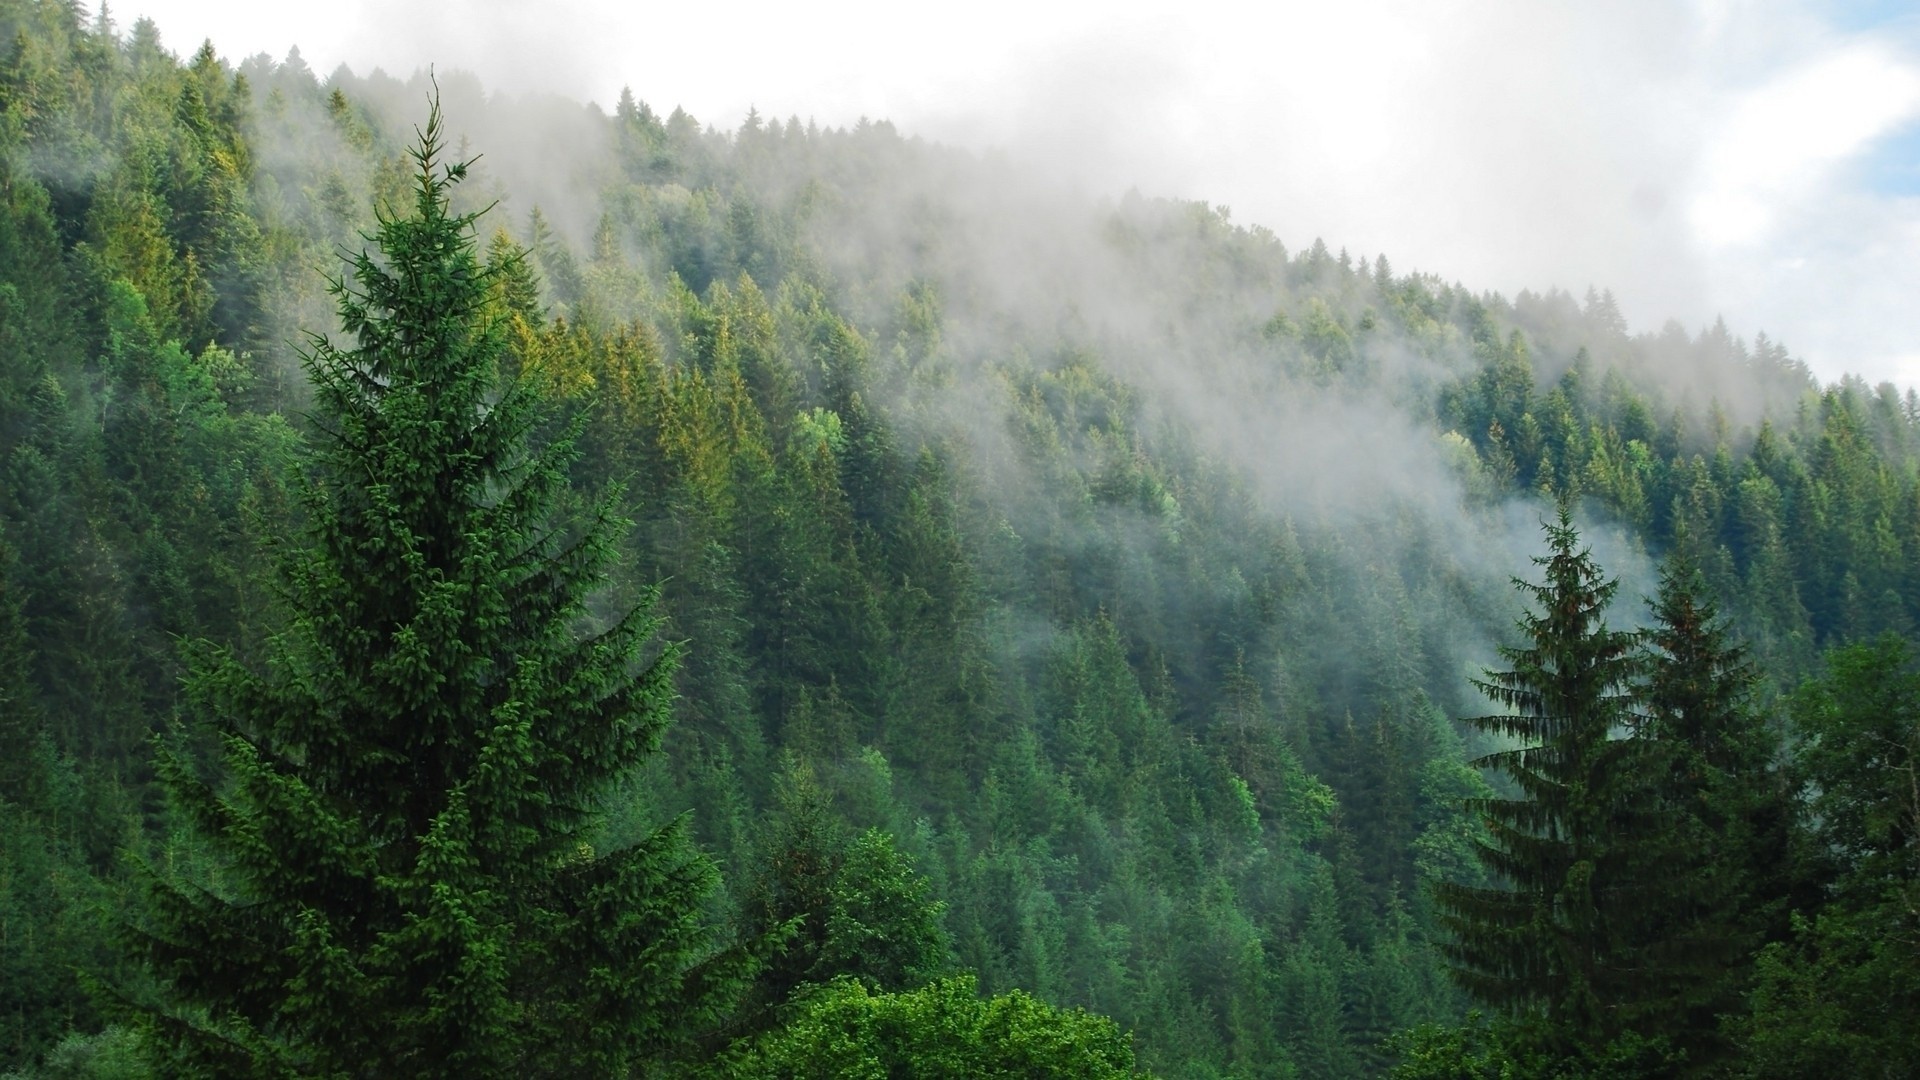 1920x1080 Fog over a pine forest wallpaper